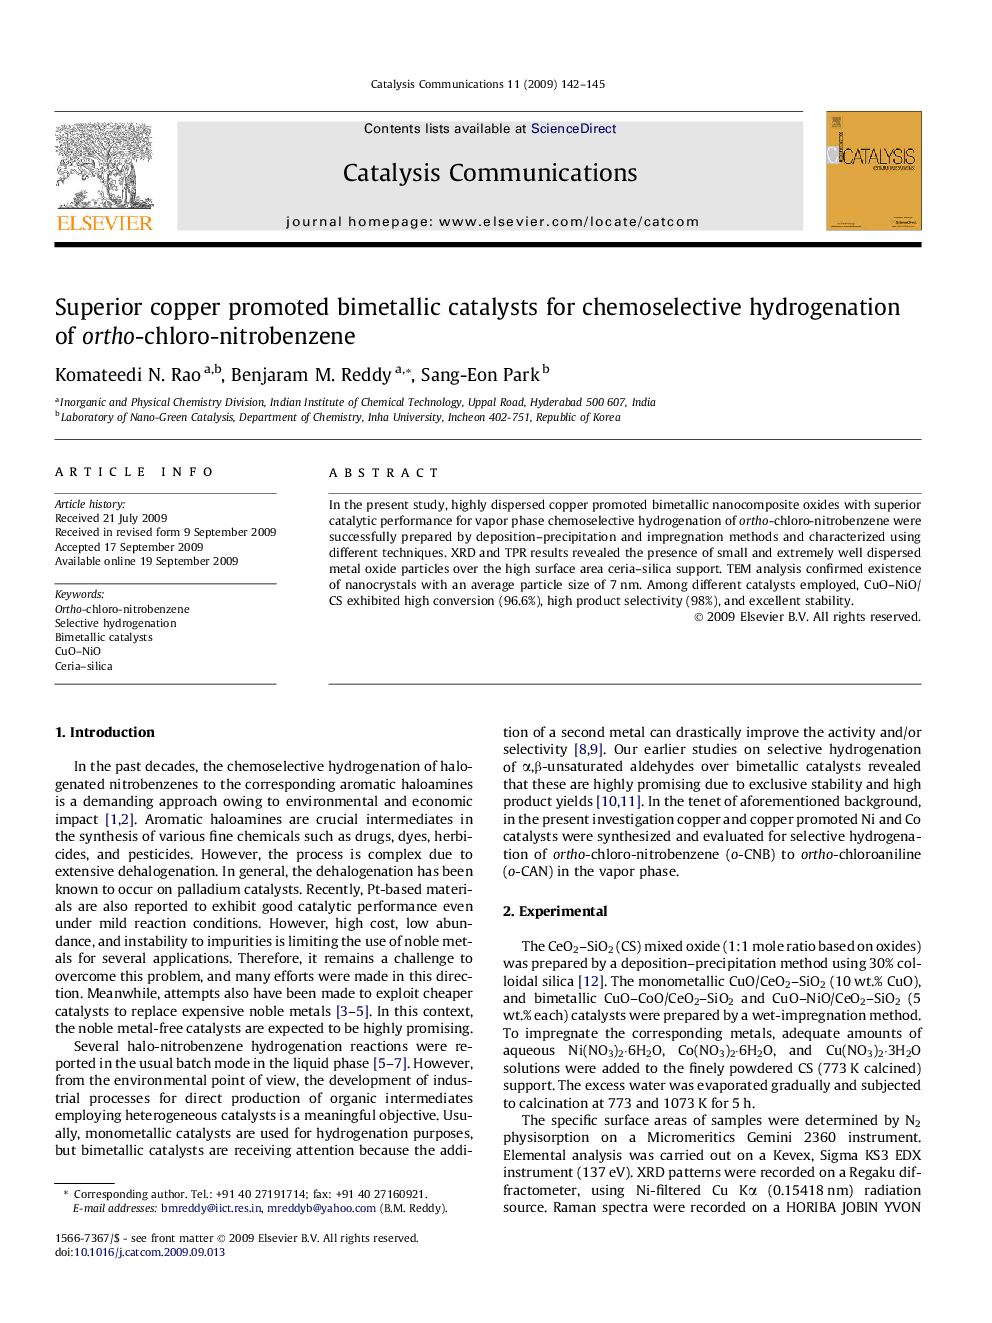 Superior copper promoted bimetallic catalysts for chemoselective hydrogenation of ortho-chloro-nitrobenzene